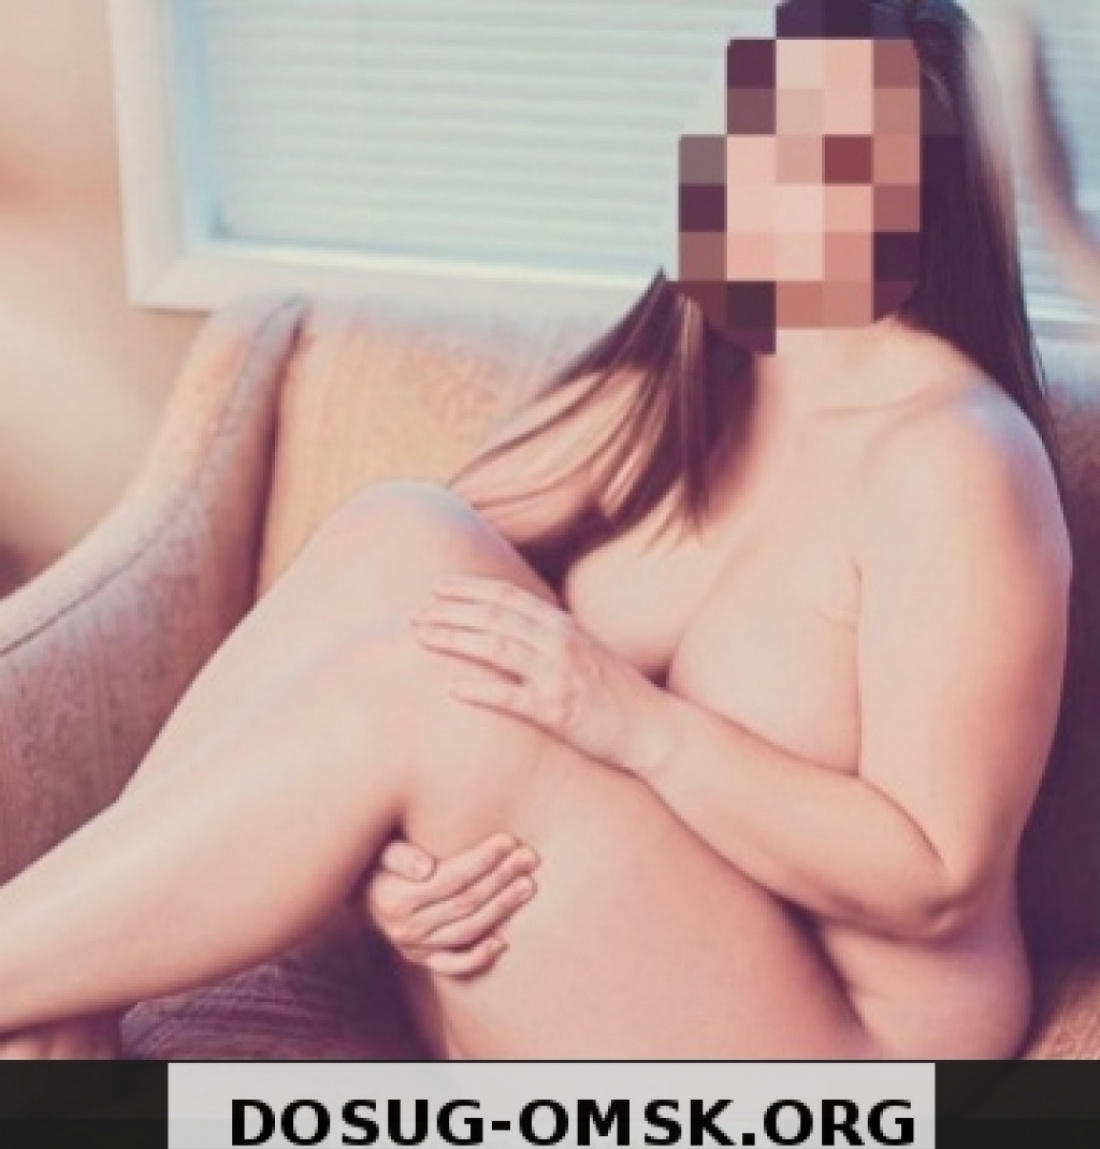 Дарина: проститутки индивидуалки в Омске